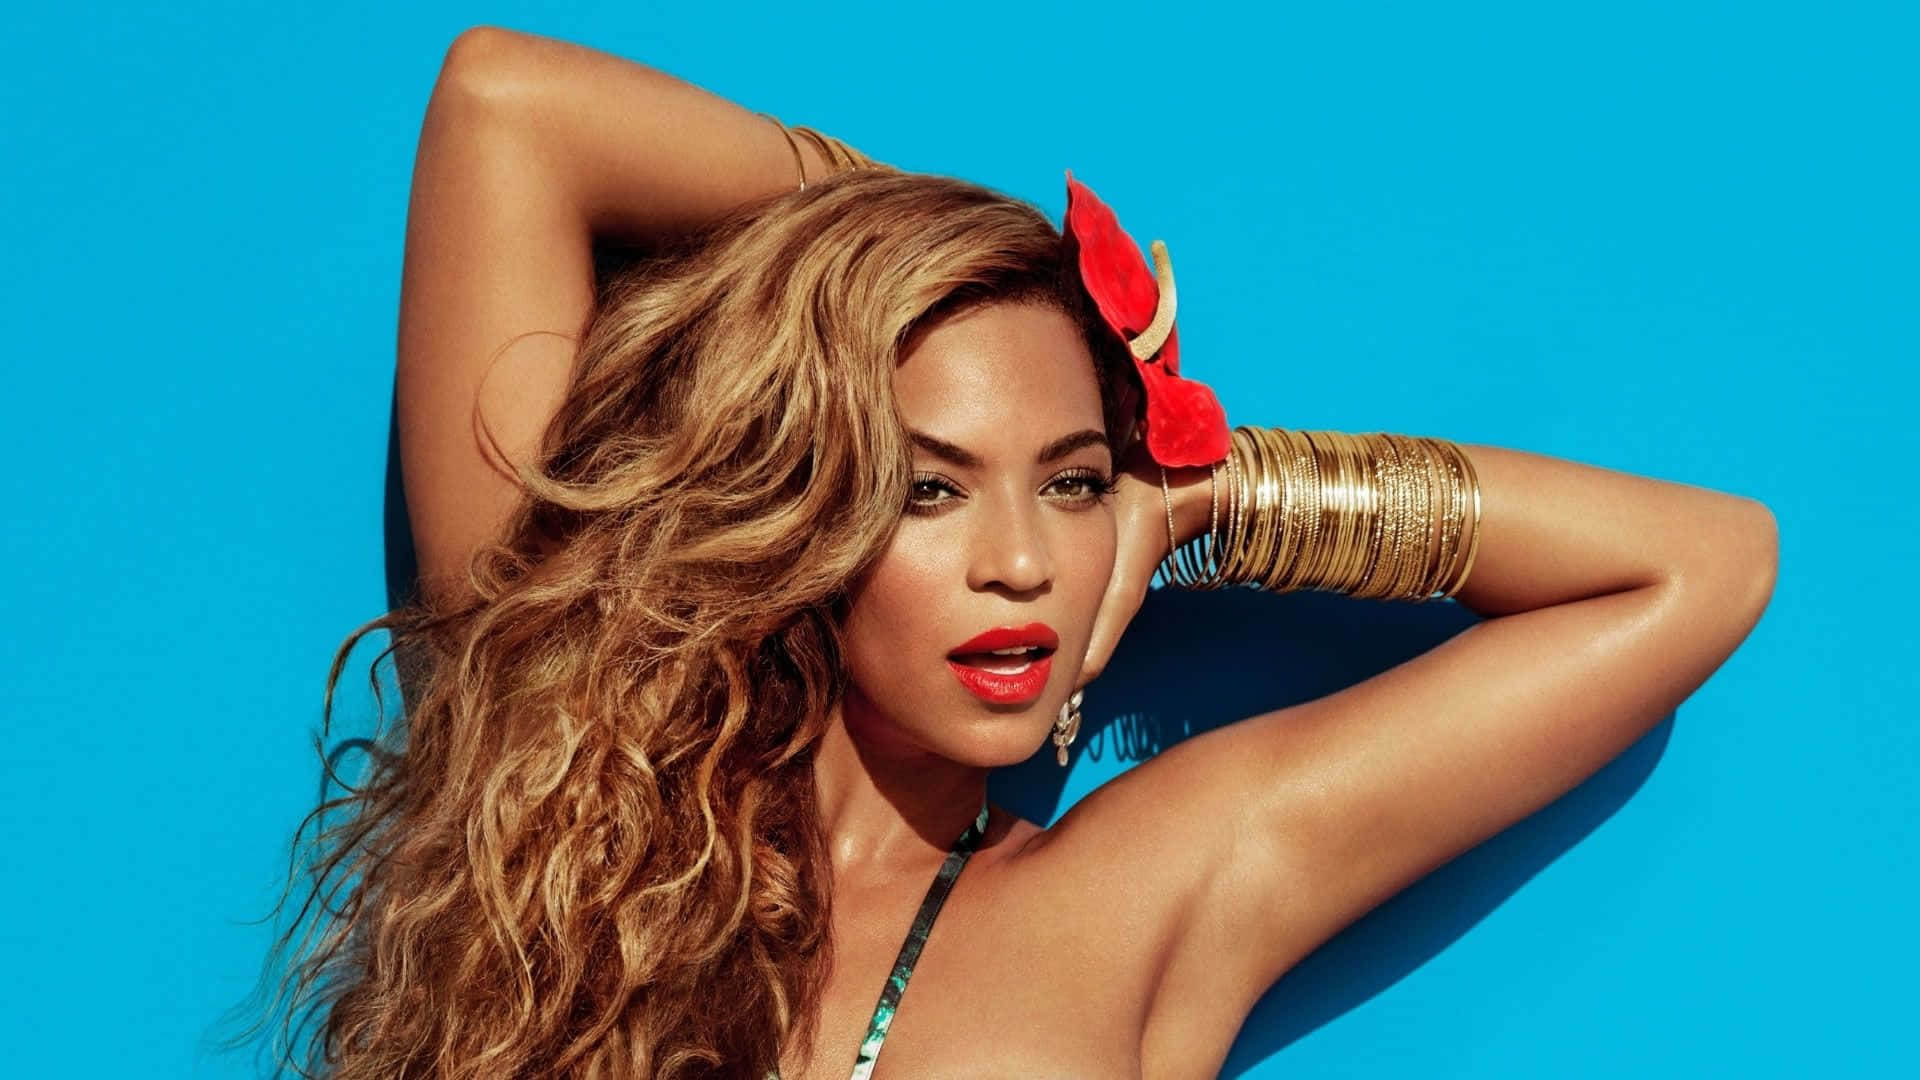 Beyoncé looking fierce in her signature yellow wrap dress.